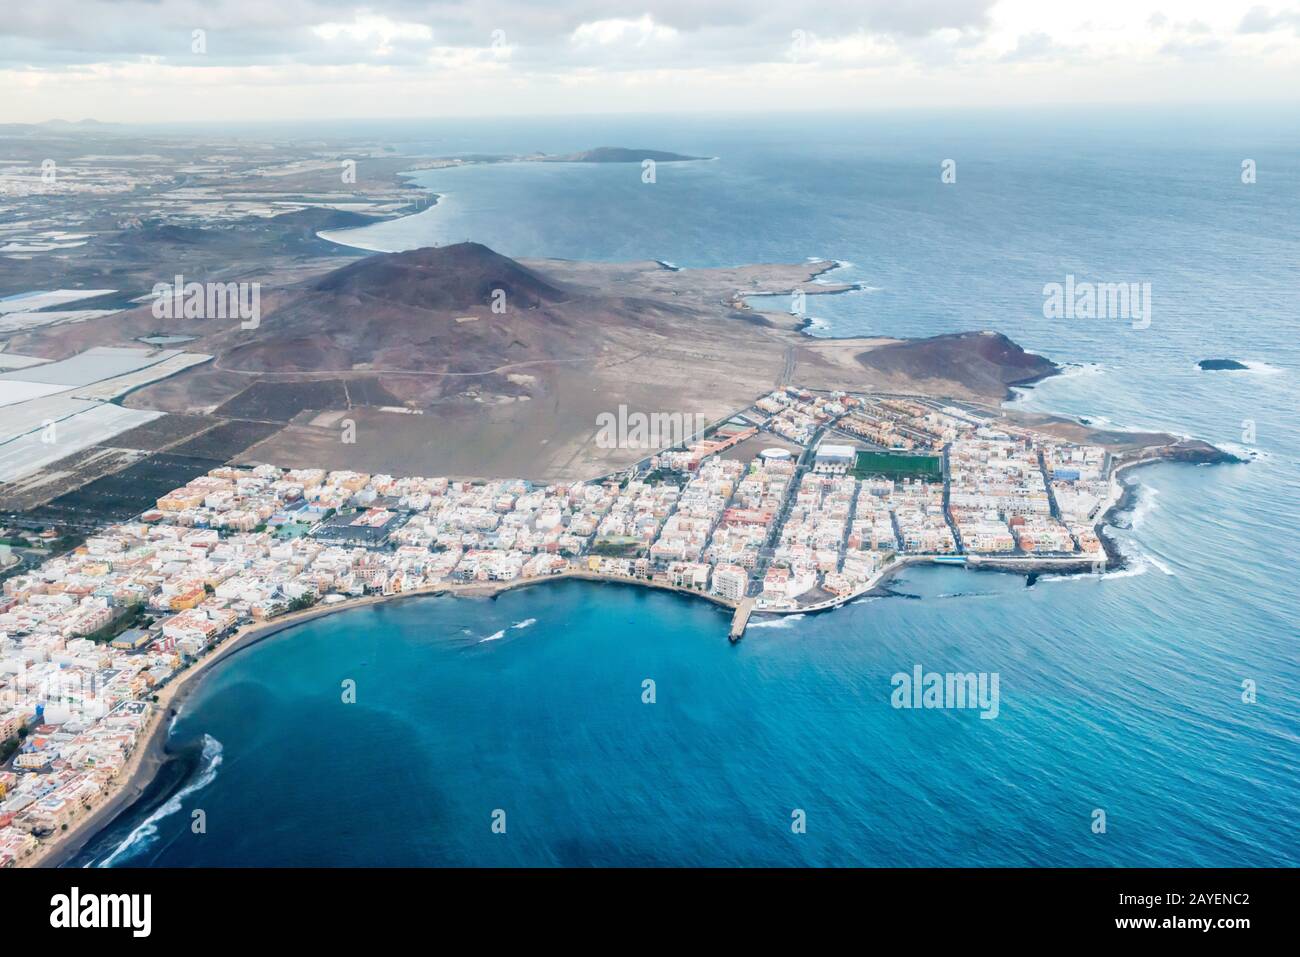 Vista aérea del paisaje costero de la isla de Gran Canaria Foto de stock